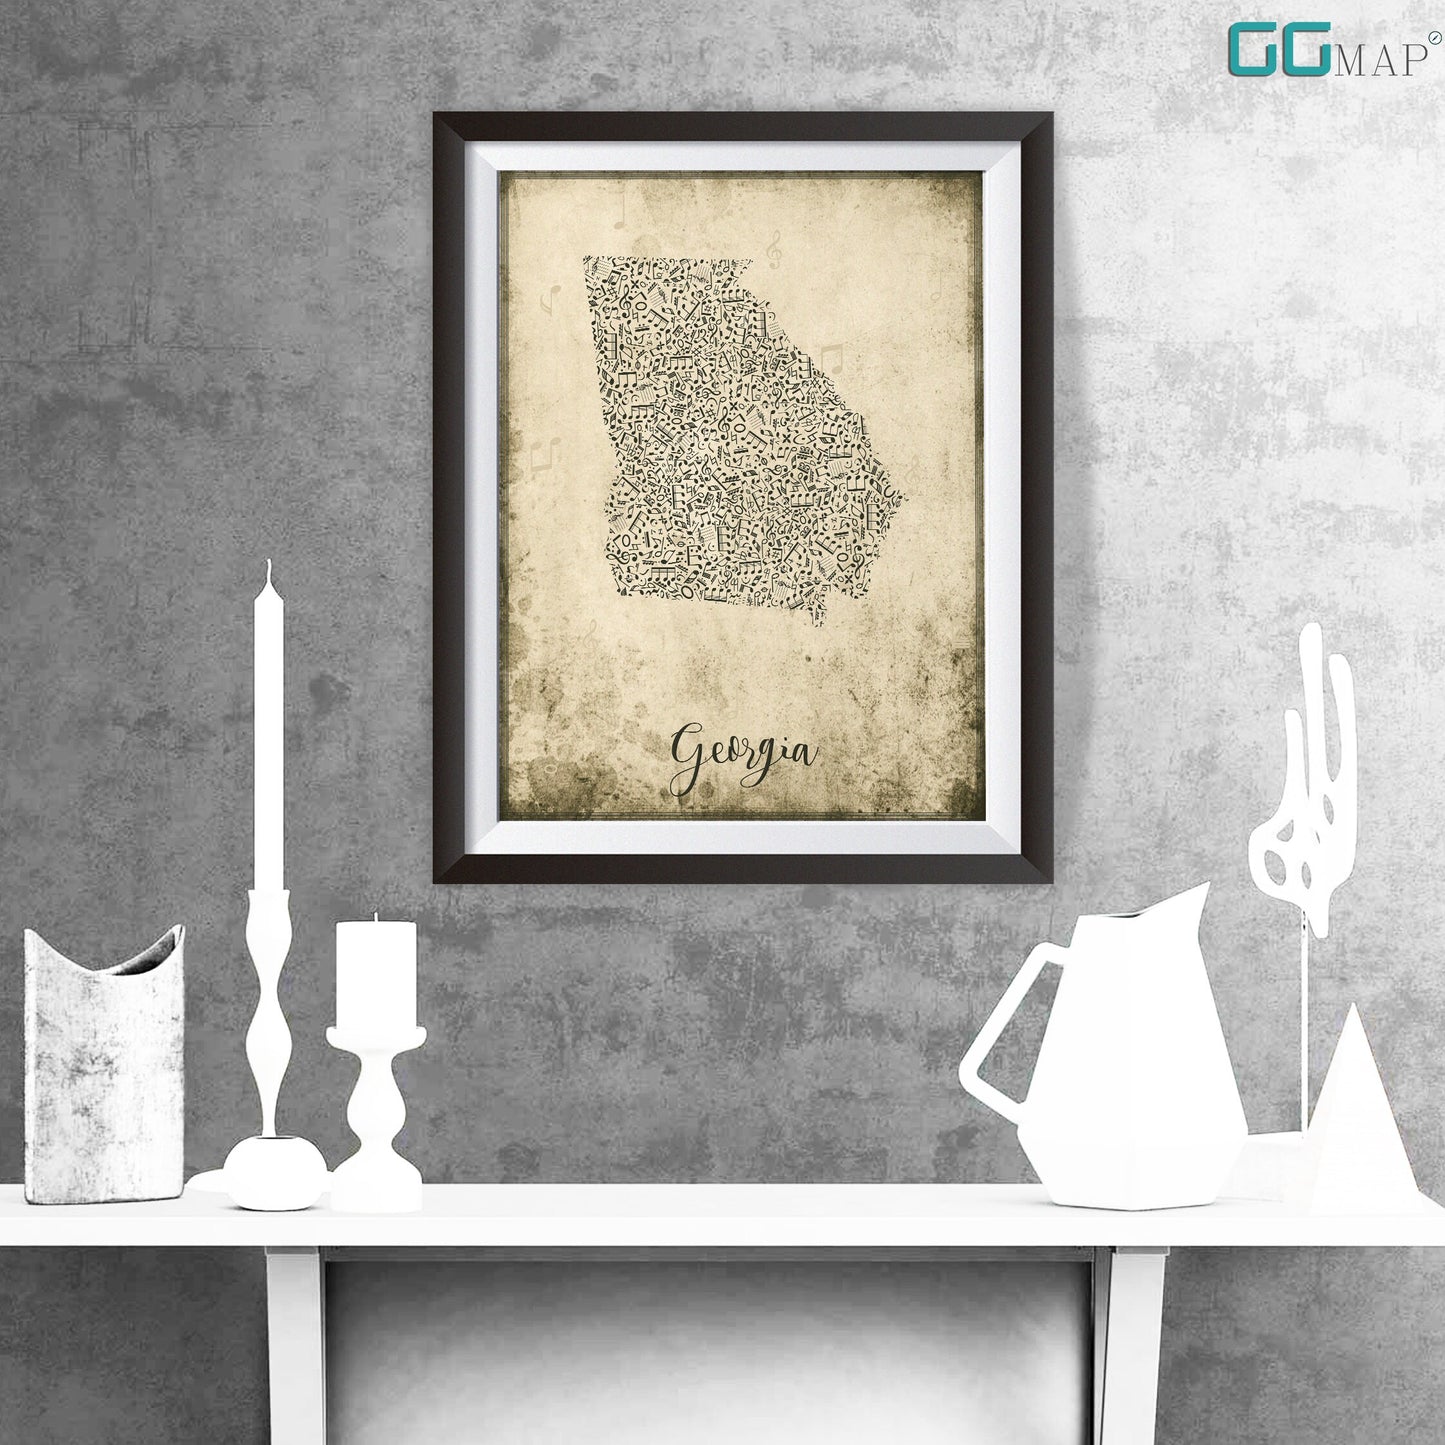 GEORGIA  map - Georgia Music map - Travel poster - Home Decor - Wall decor - Office map - Georgia gift - GGmap - Georgia poster